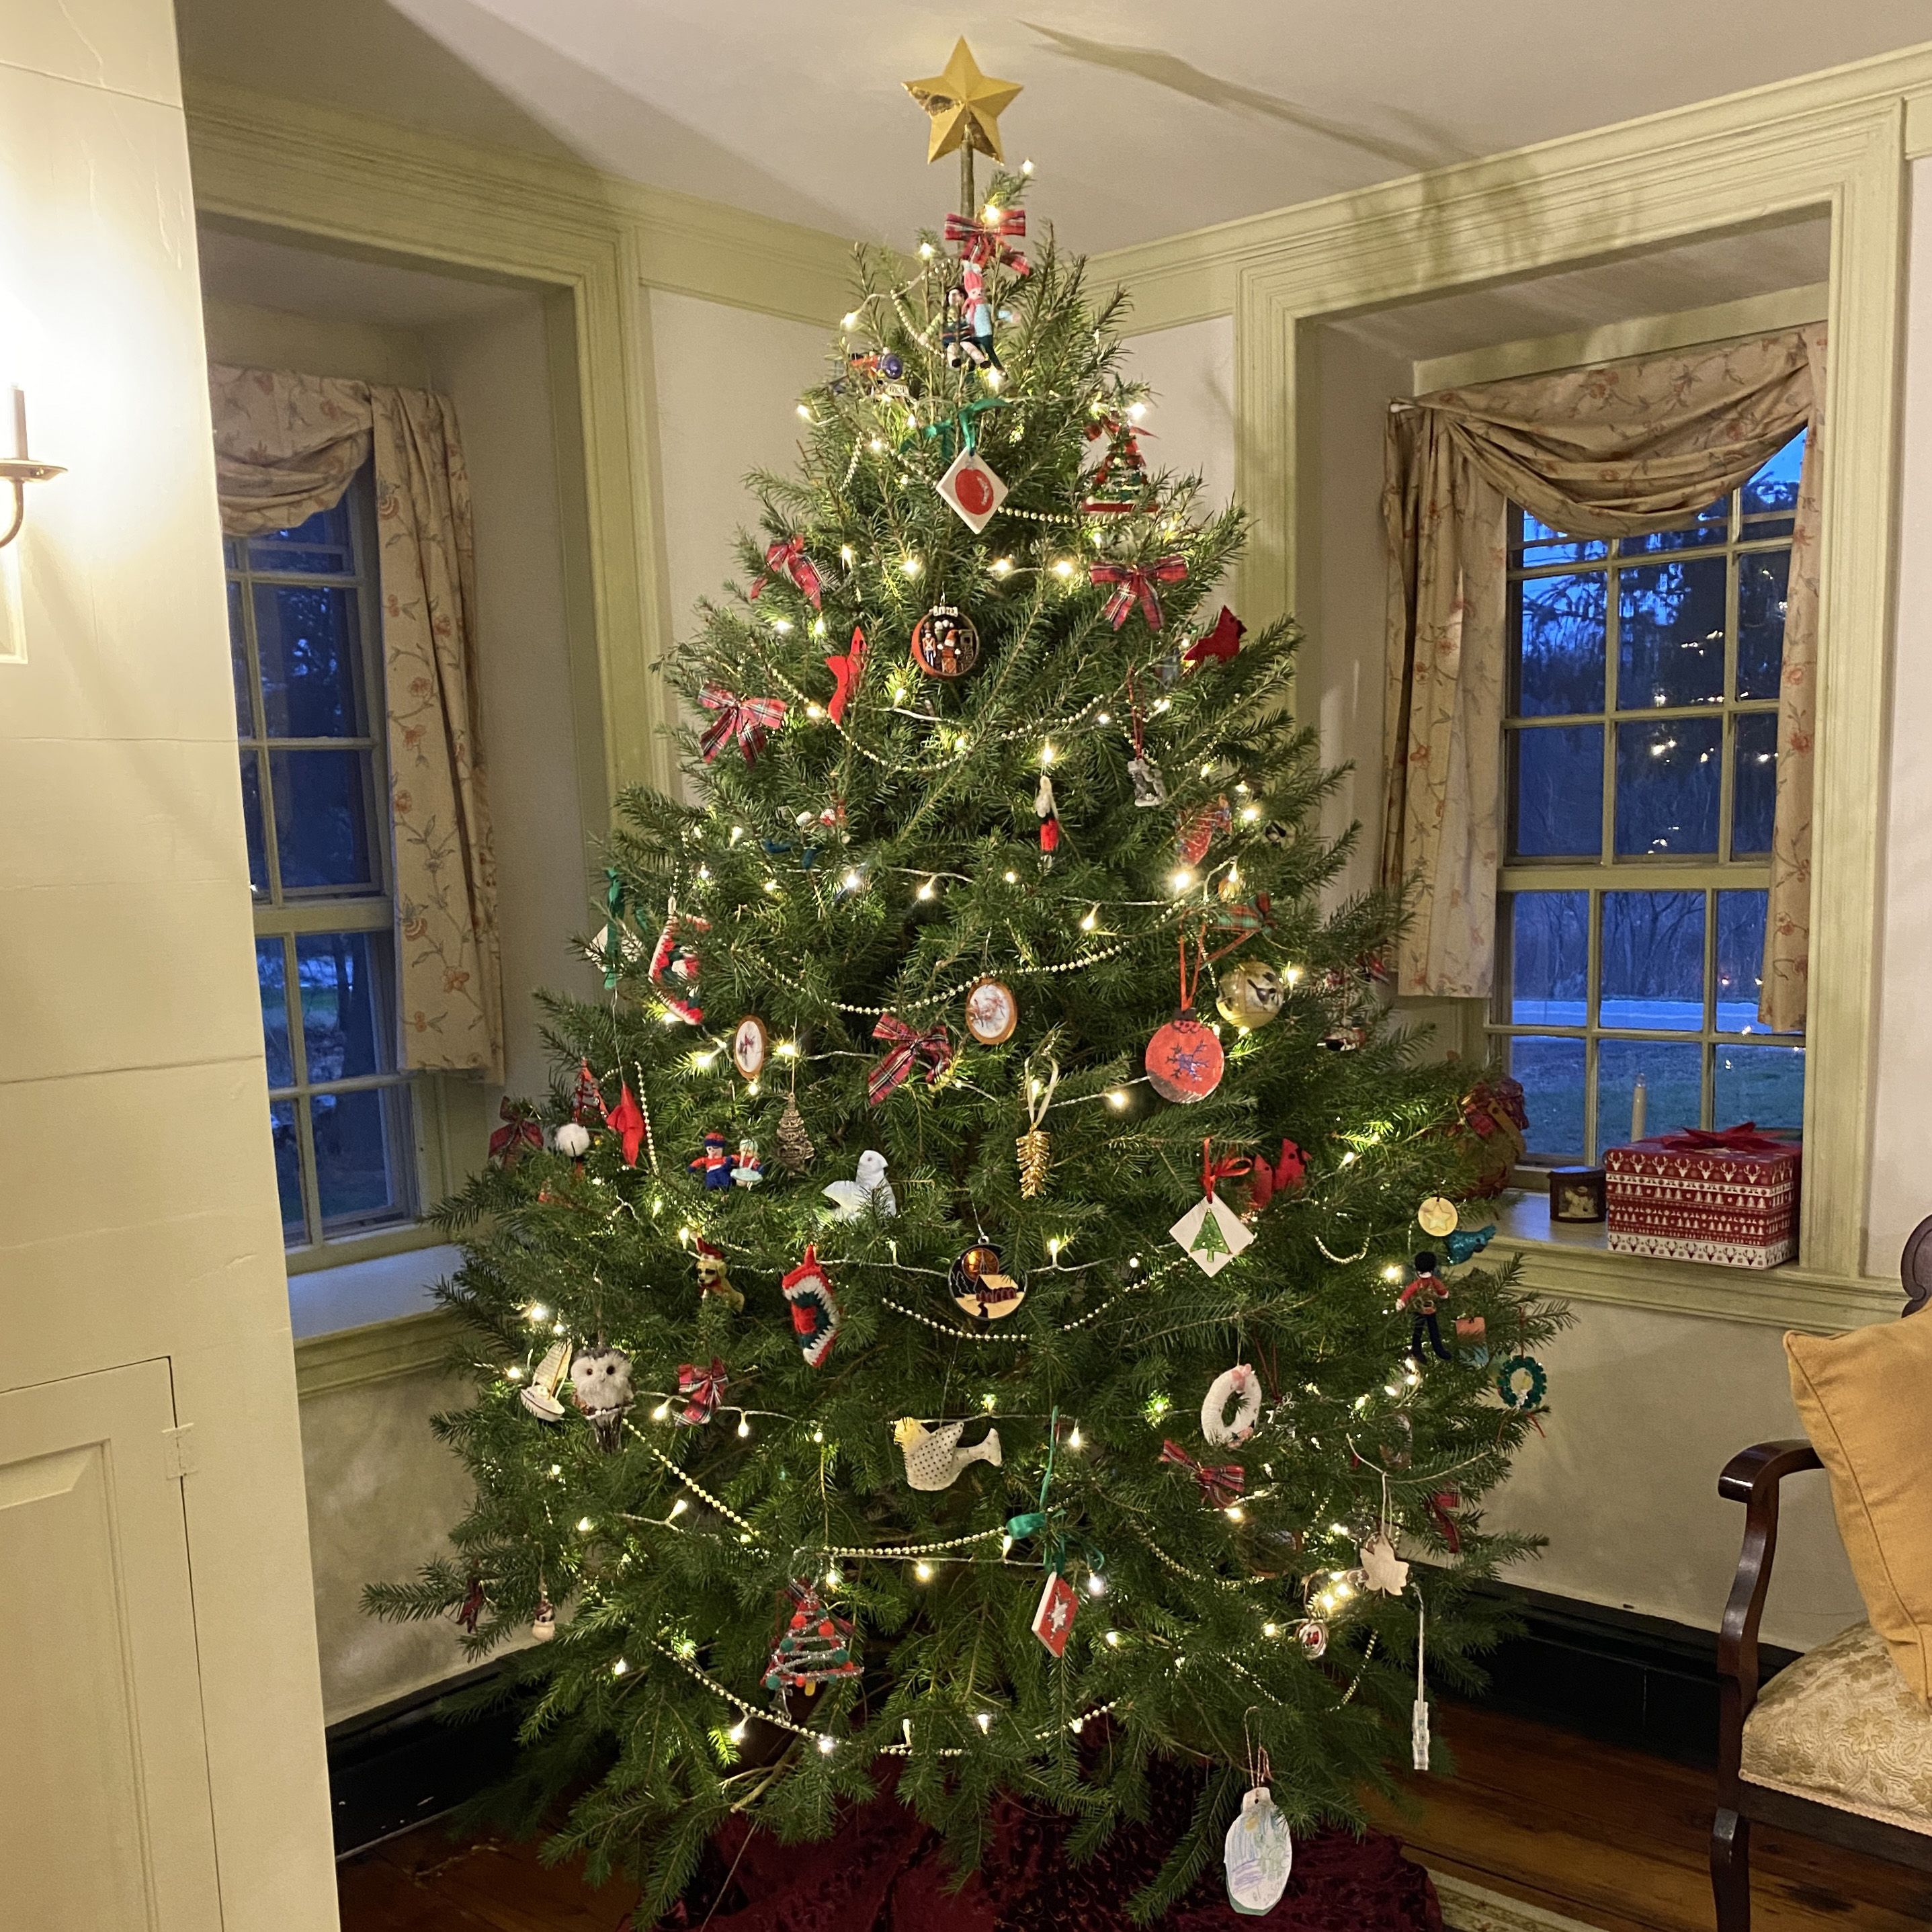 How to Keep Christmas Tree Alive